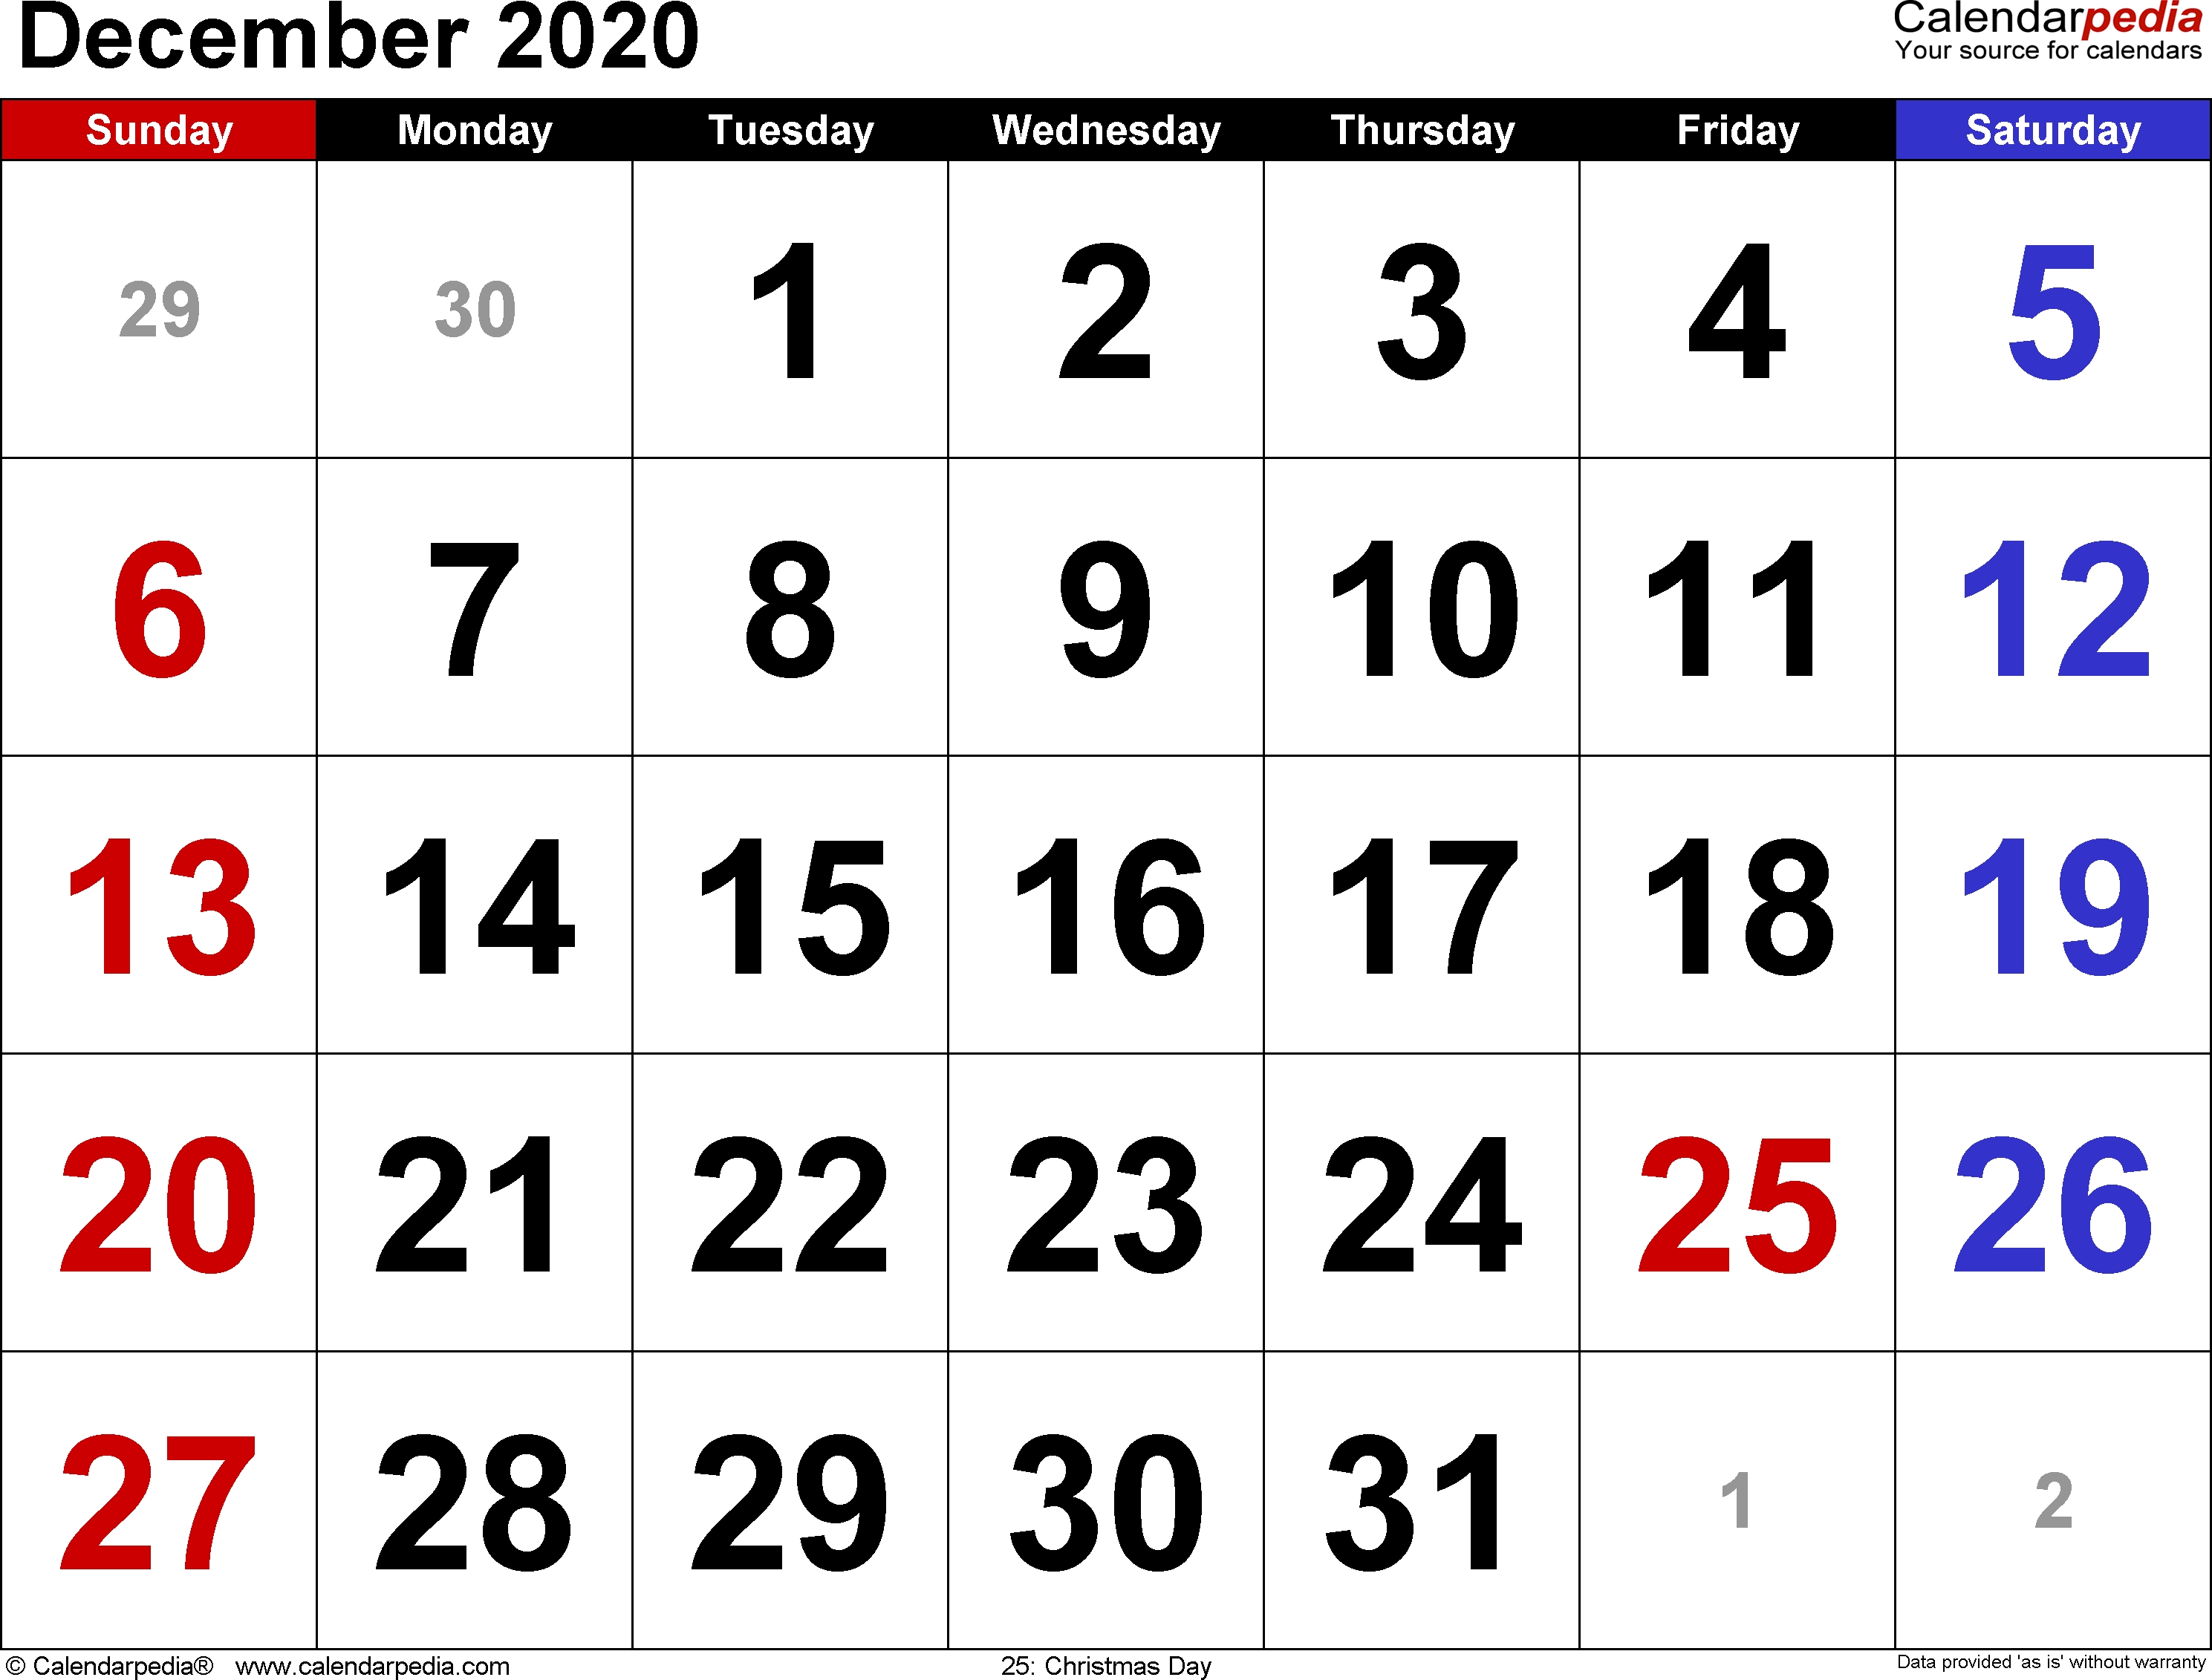 December 2020 Calendars For Word, Excel &amp; Pdf Dashing 2020 Calendar For December